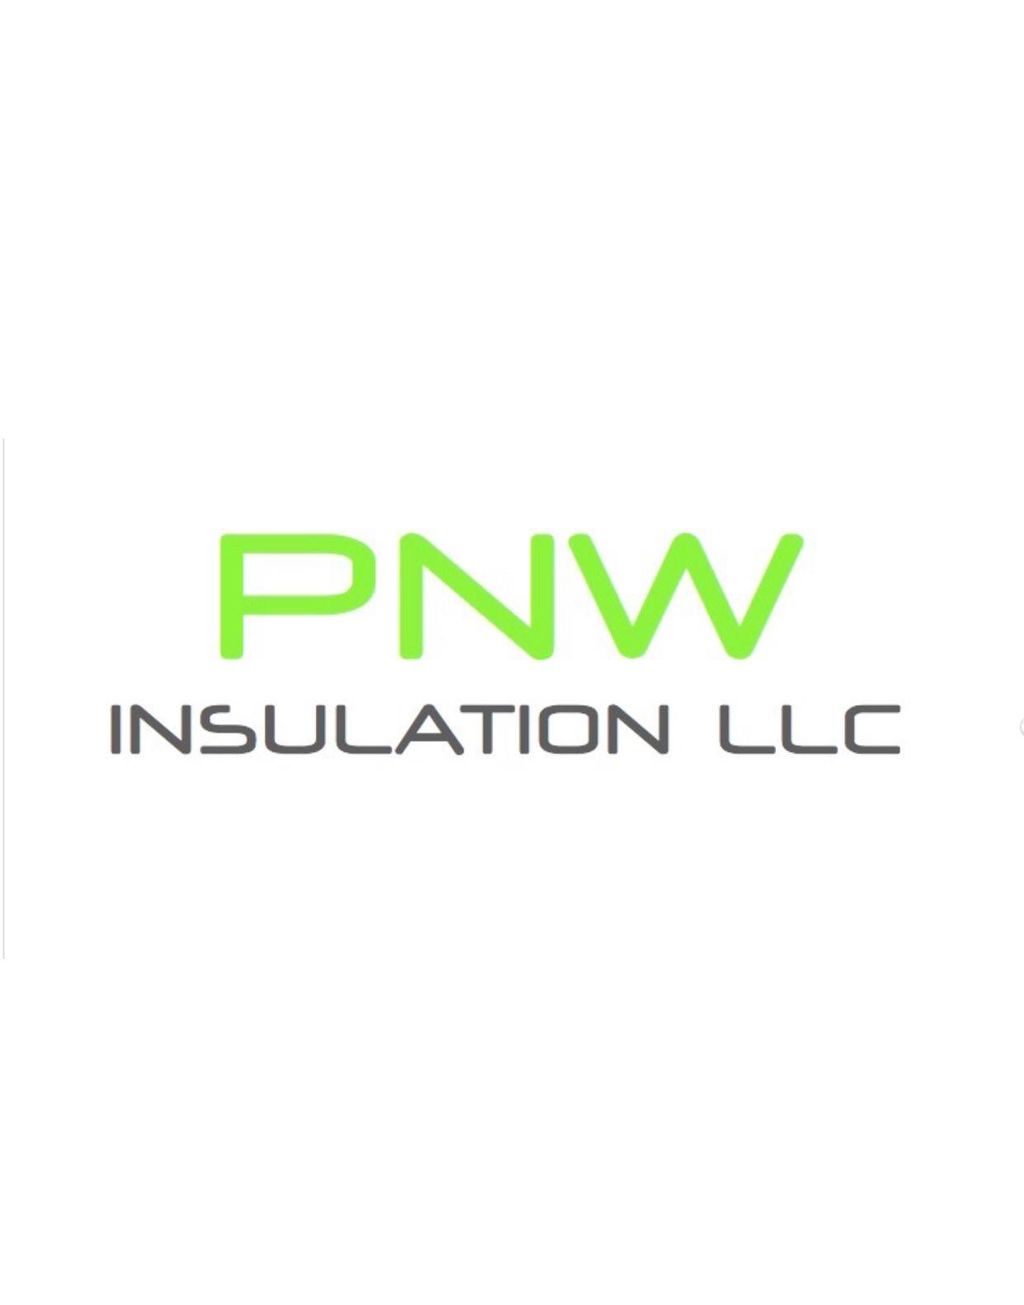 PNW INSULATION LLC